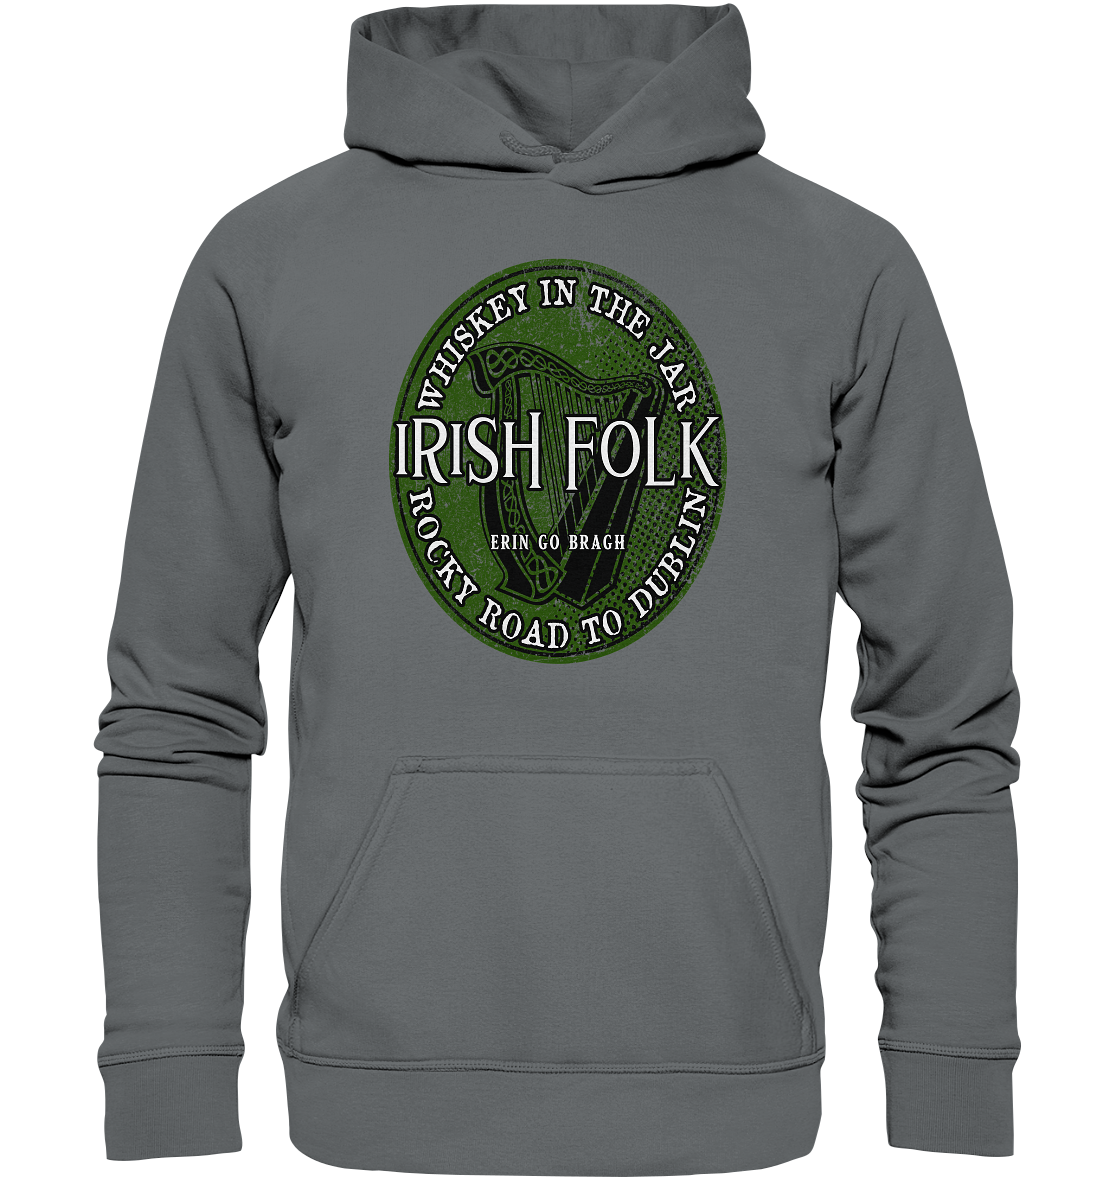 Irish Folk "Erin Go Bragh" - Basic Unisex Hoodie